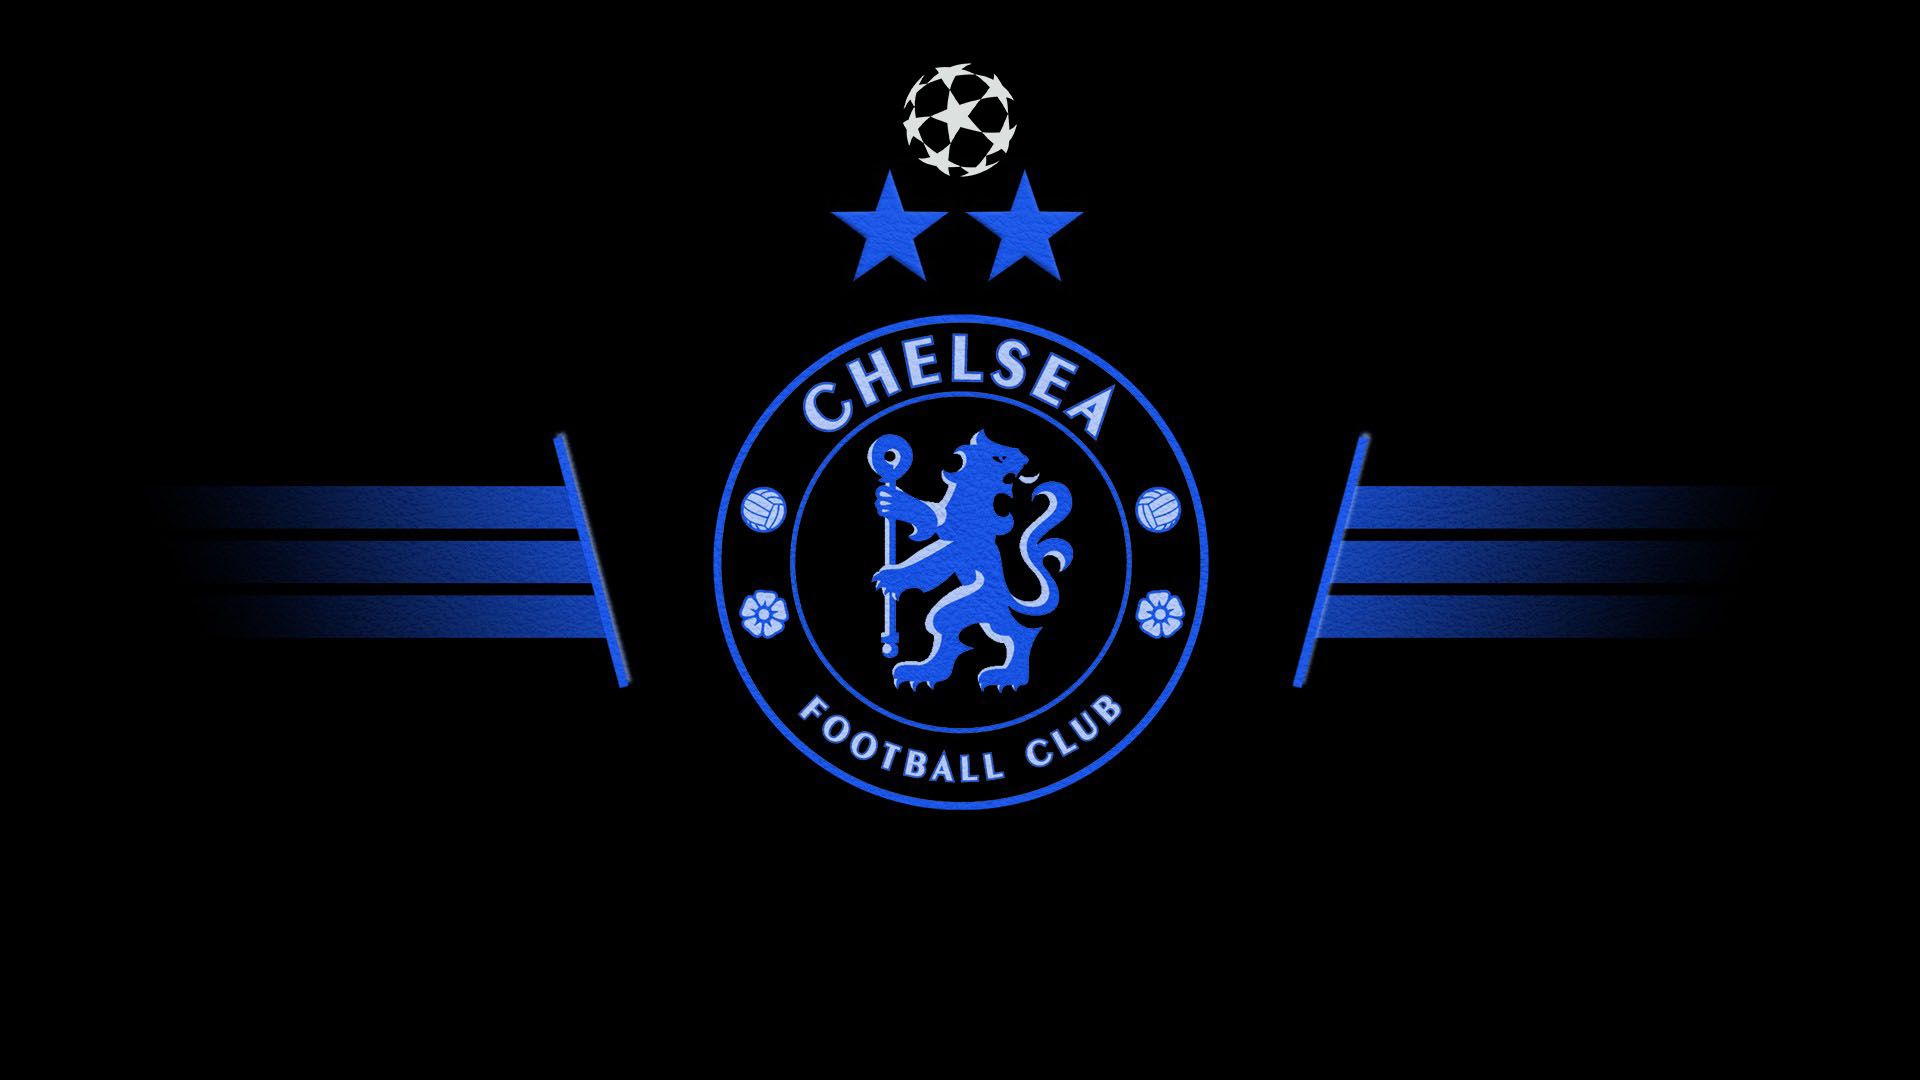 Chelsea Hintergrundbild 1920x1080. Soccer Champions League Soccer Clubs Chelsea FC Logo Black Background Wallpaper:1920x1080